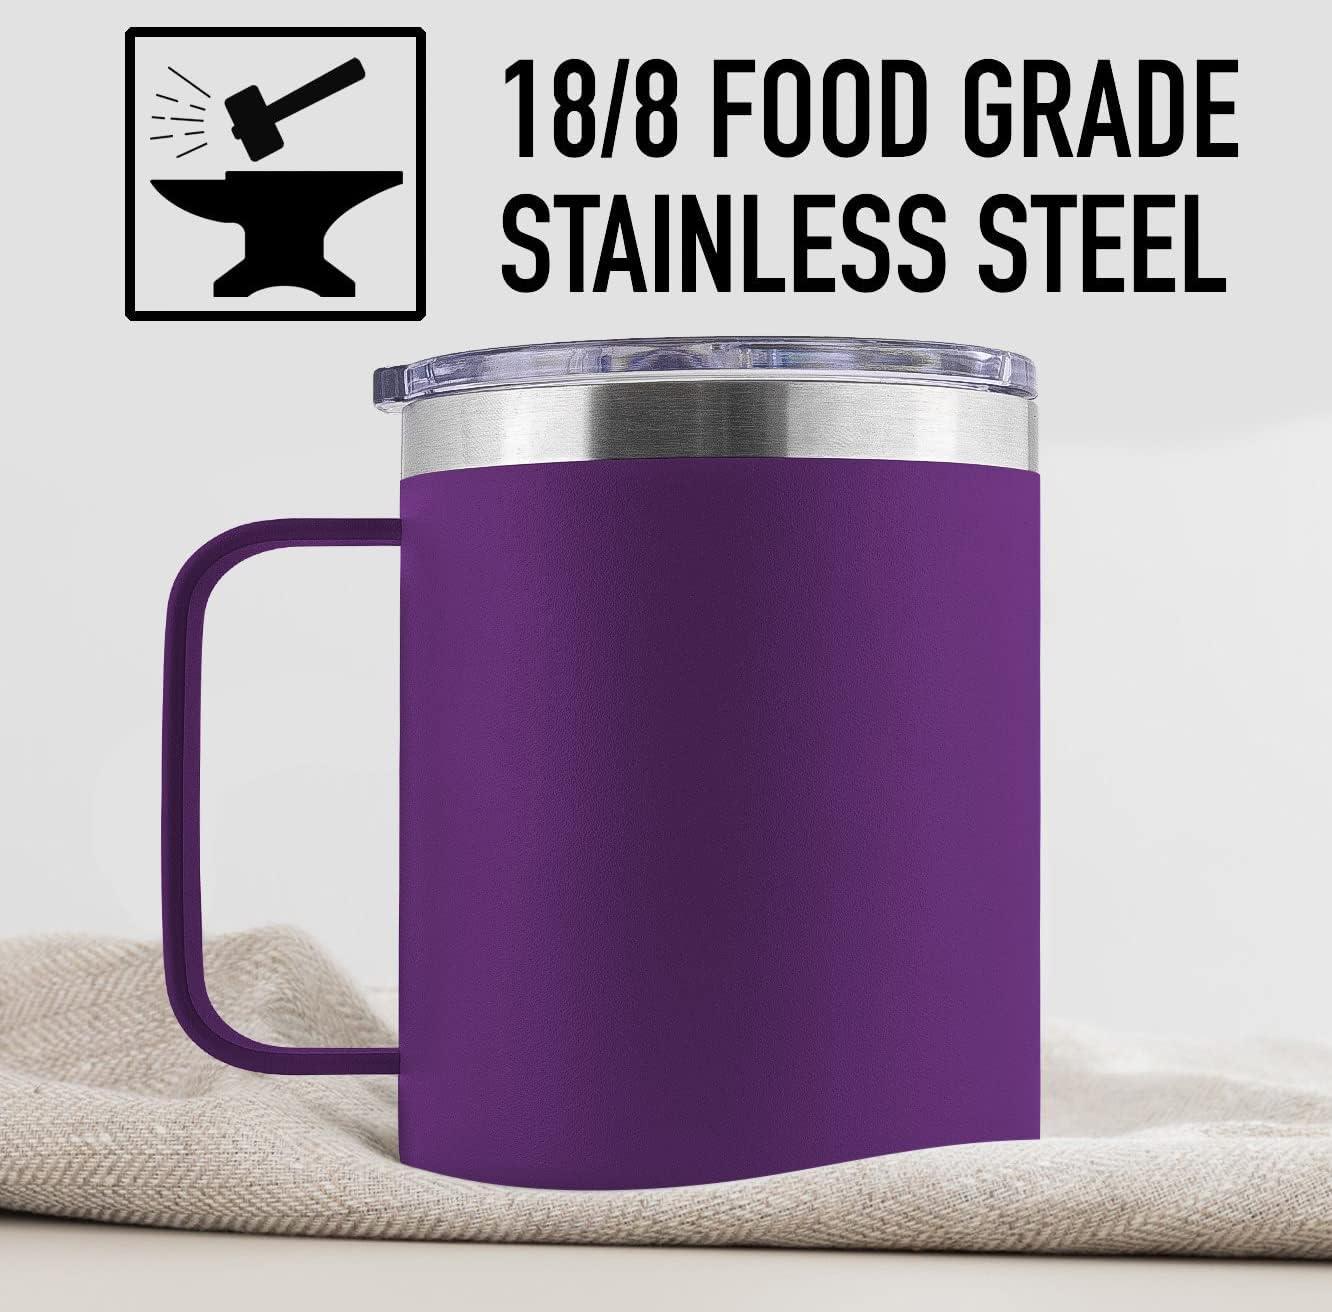 Zulay 12 oz Insulated Coffee Mug with Lid - Stainless Steel